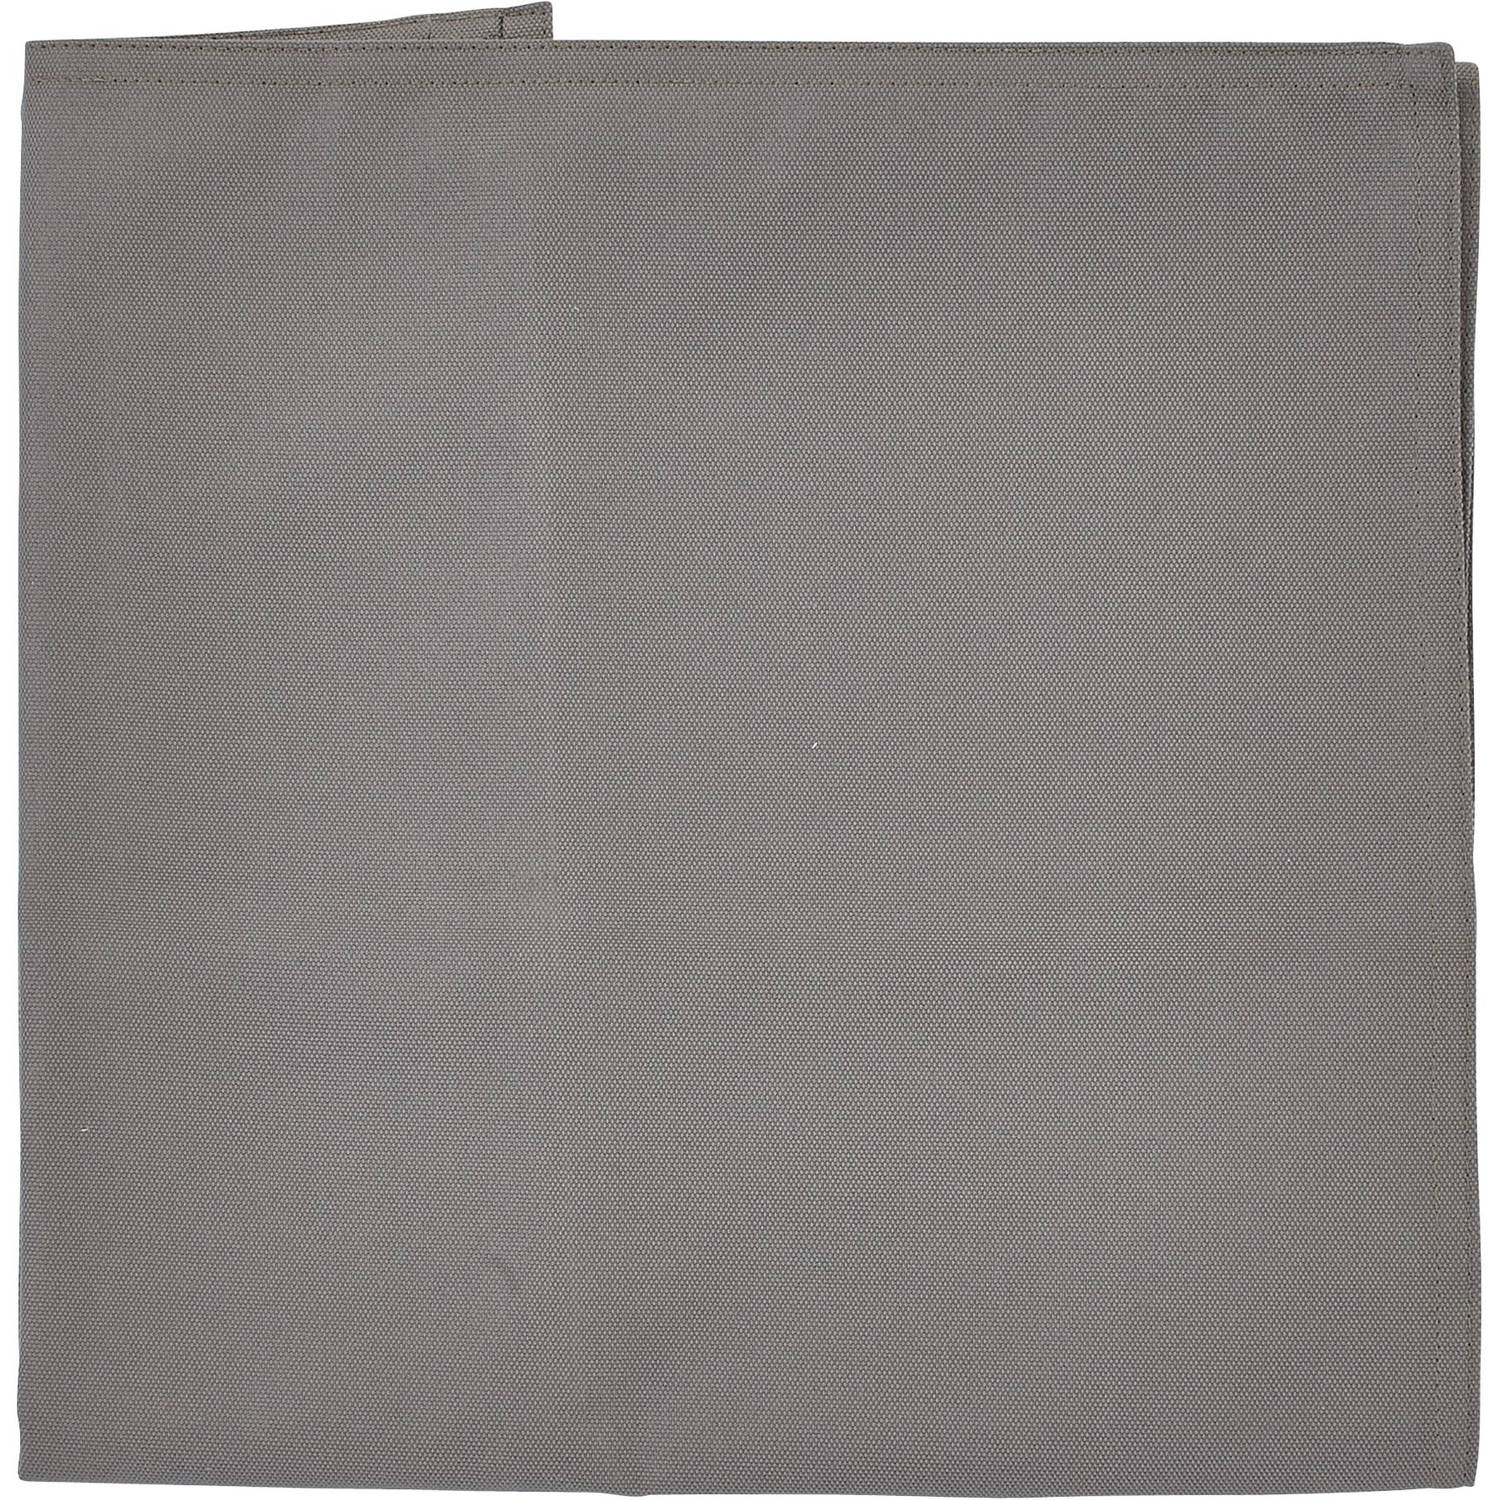 Loper Sunny 45x150 cm donker grijs